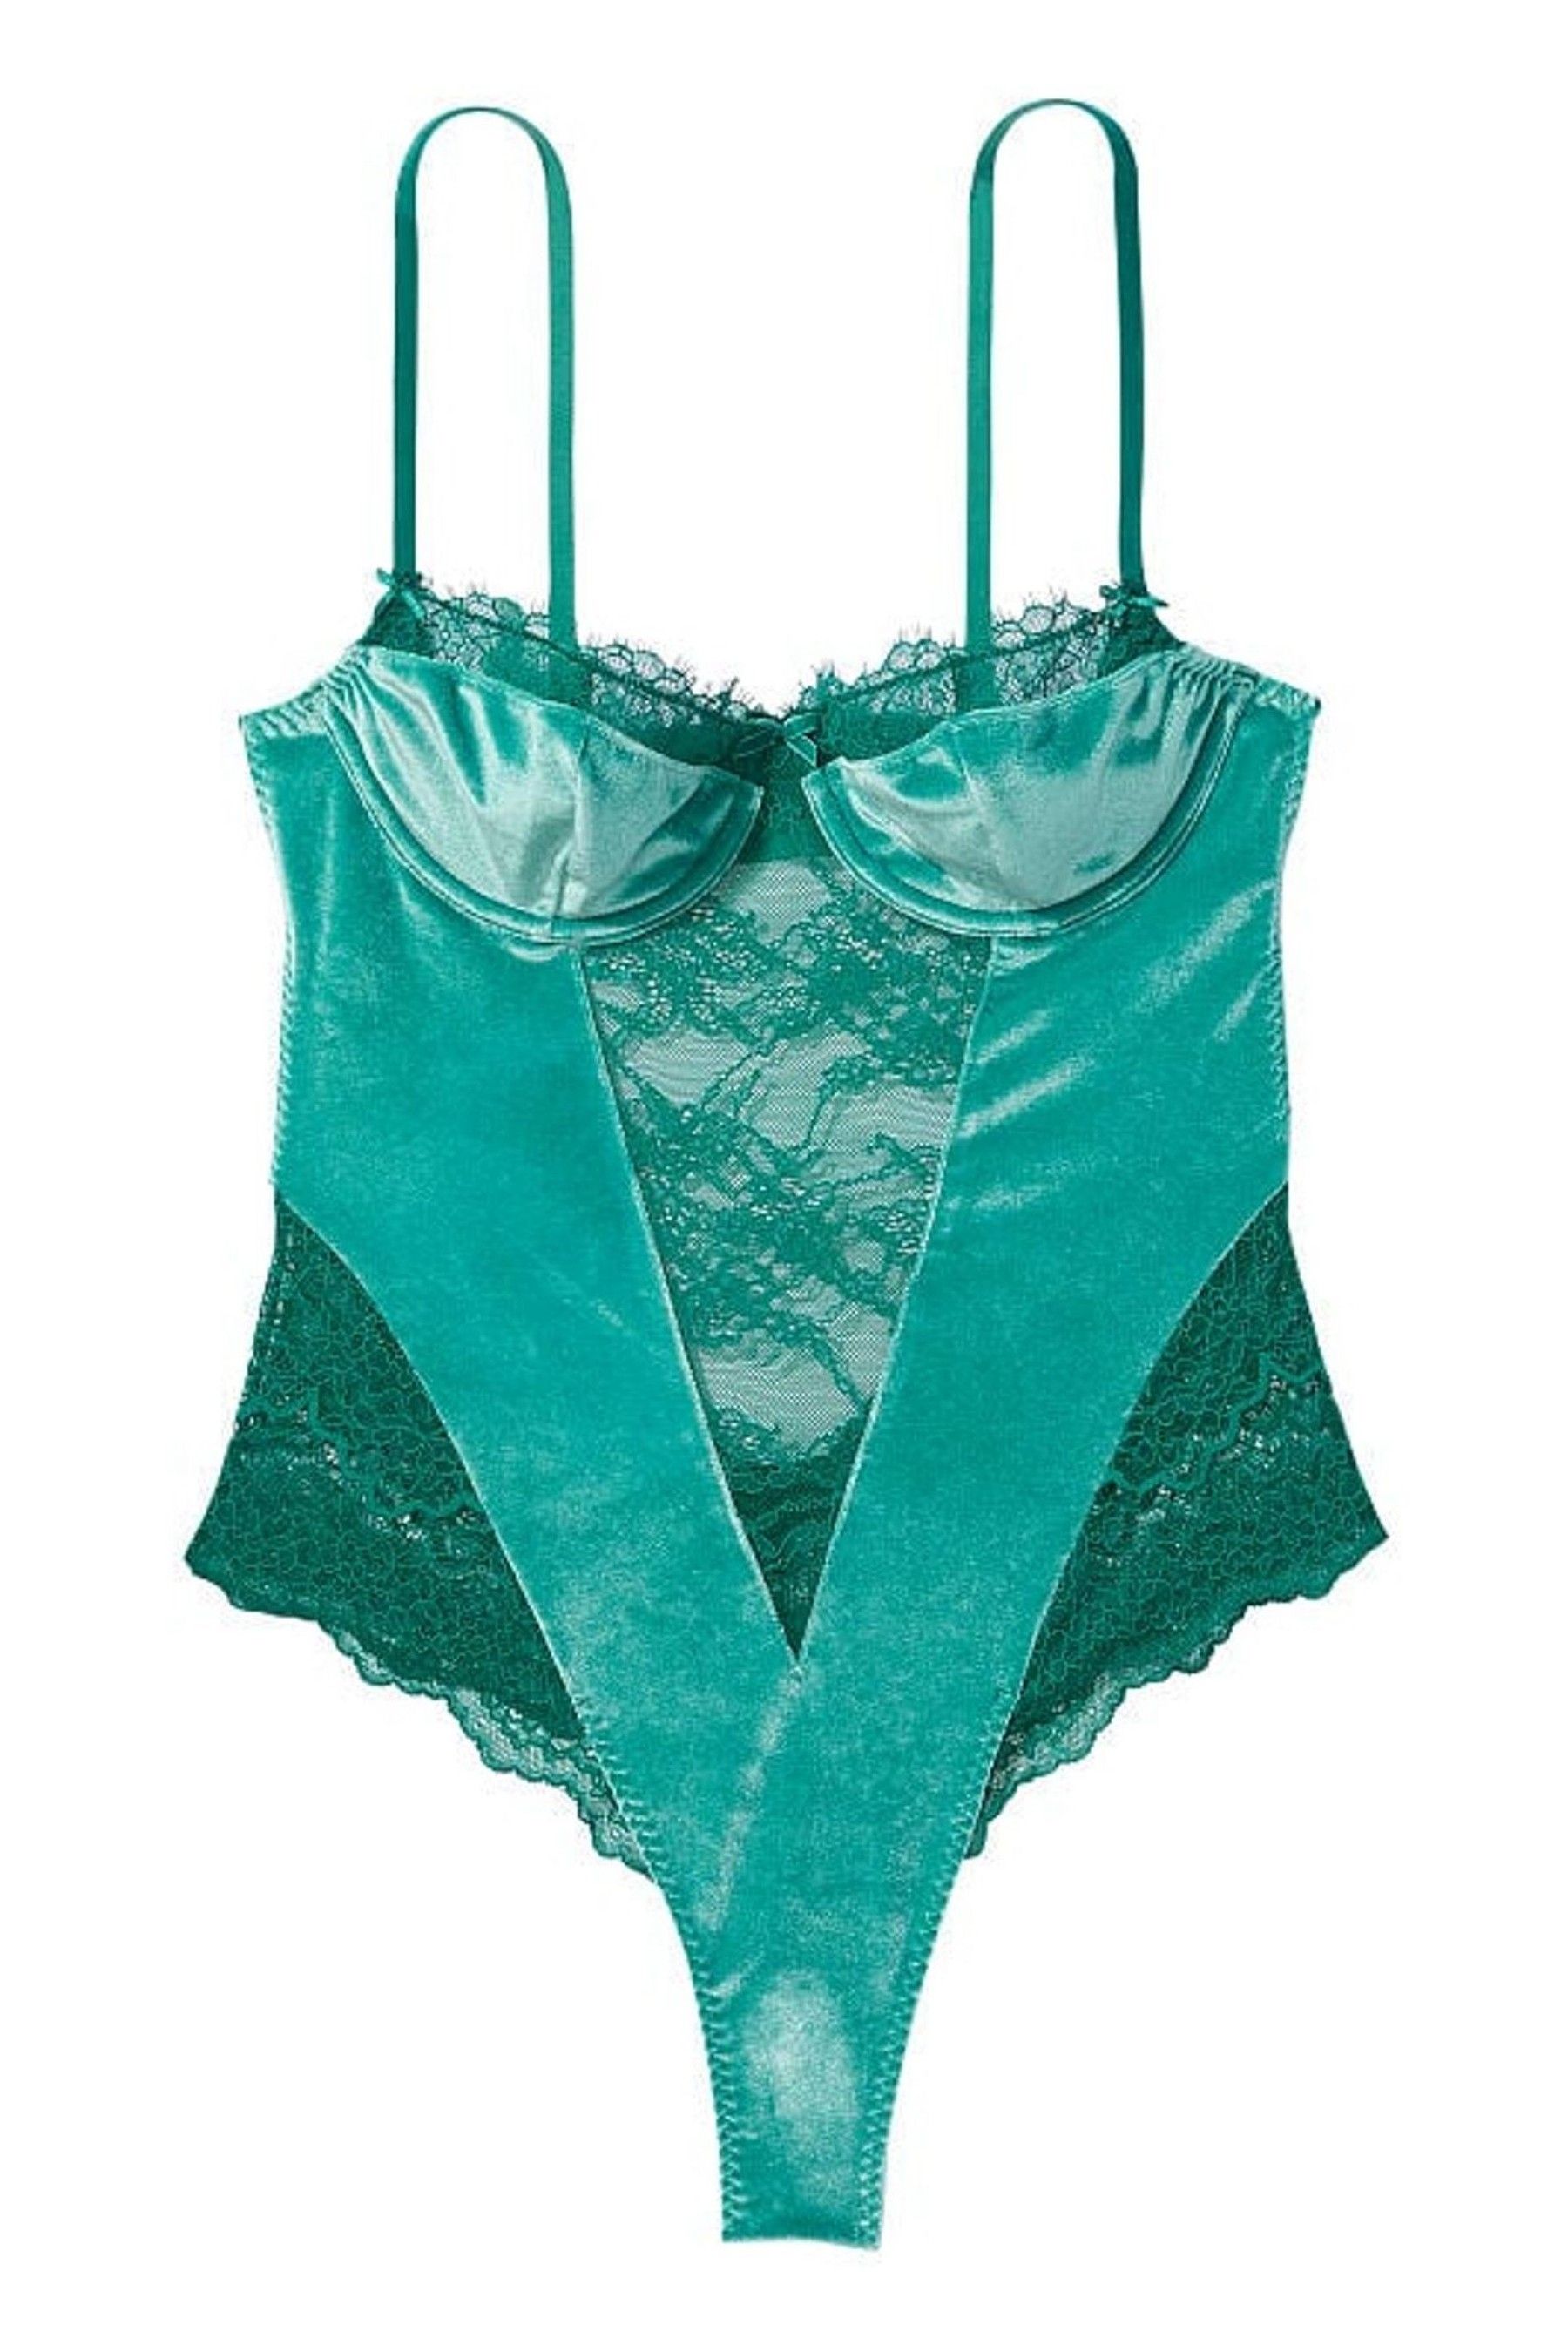 Buy Victoria's Secret Wicked Unlined Velvet Balcony Bodysuit from the ...